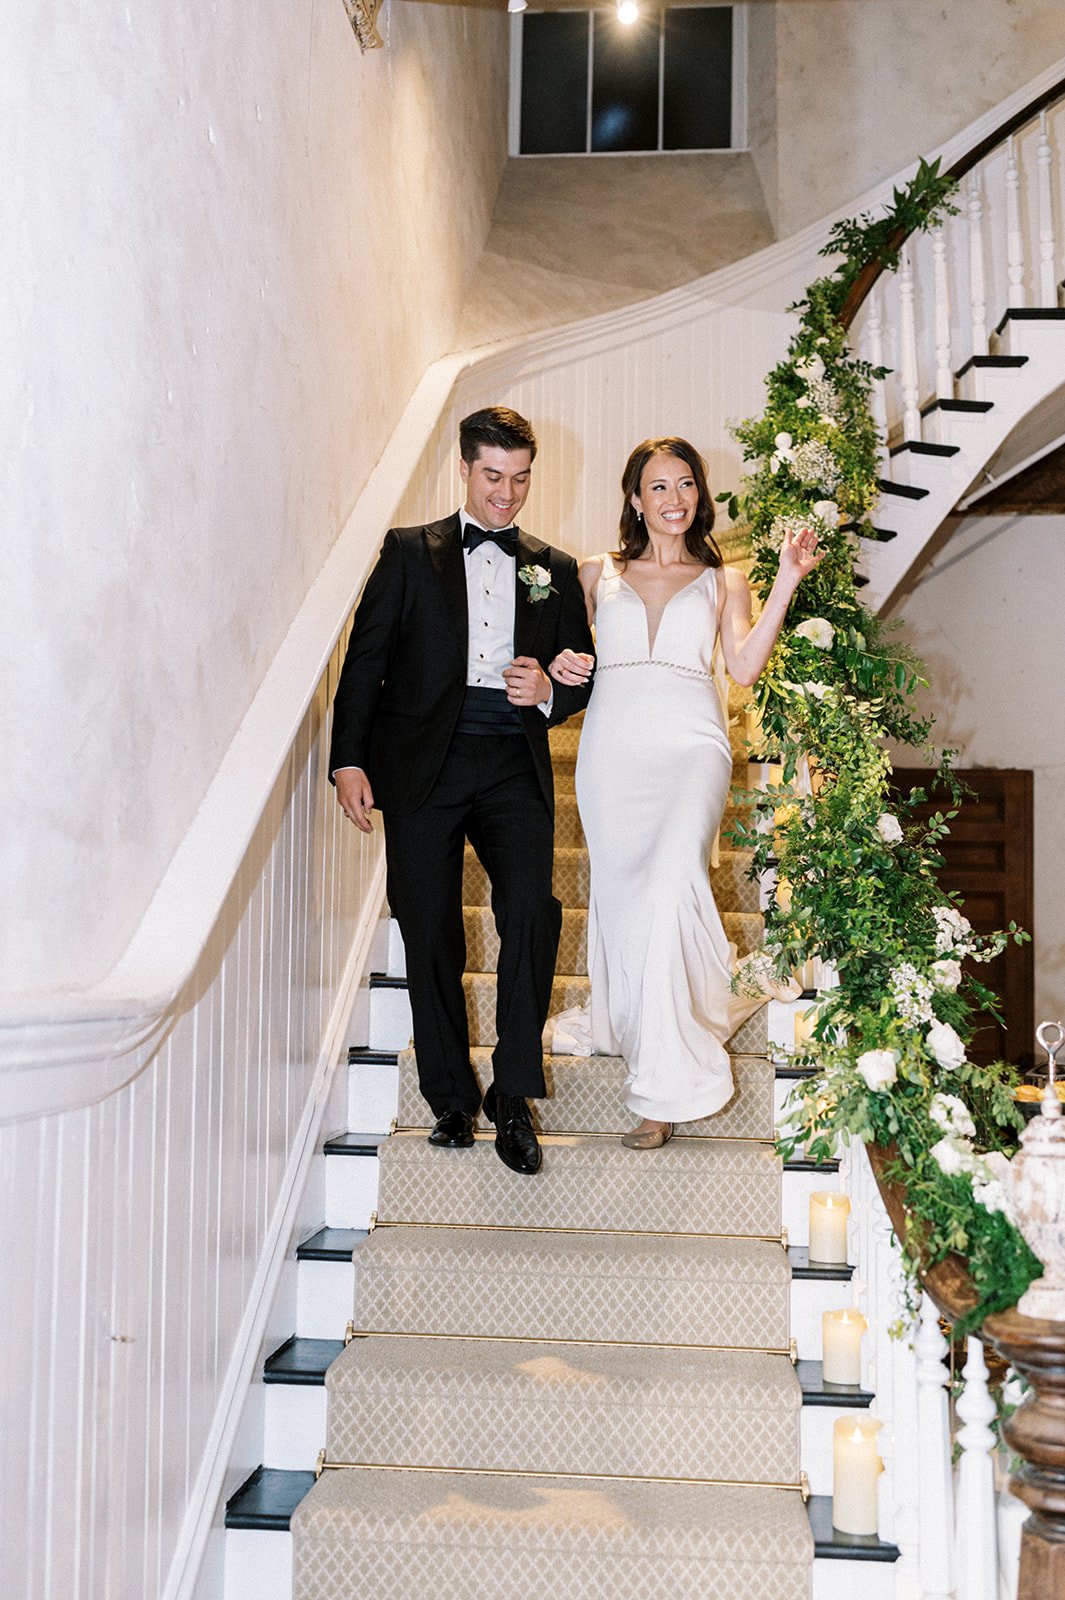 Couple descending the grand historic staircase in the Grand Salon of Excelsior wedding venue